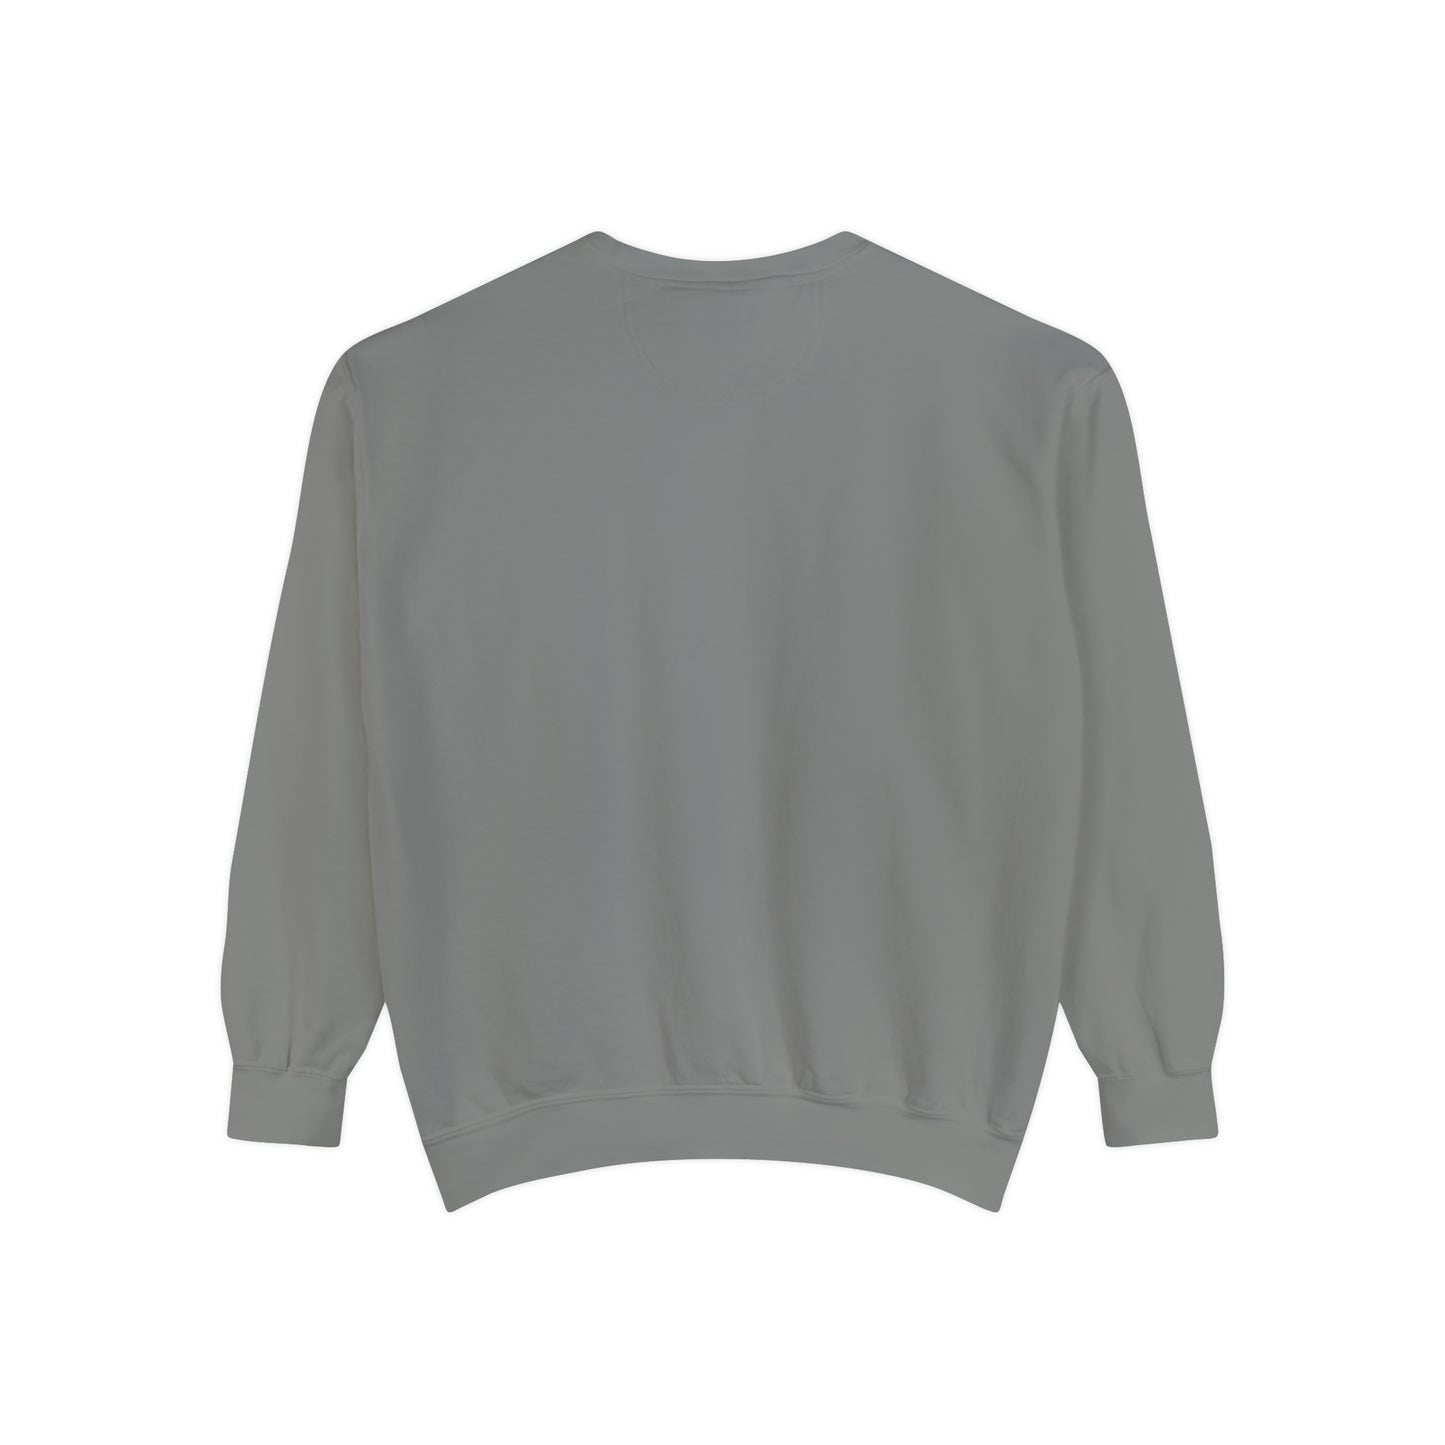 Baking Spirits Bright Unisex Garment-Dyed Sweatshirt